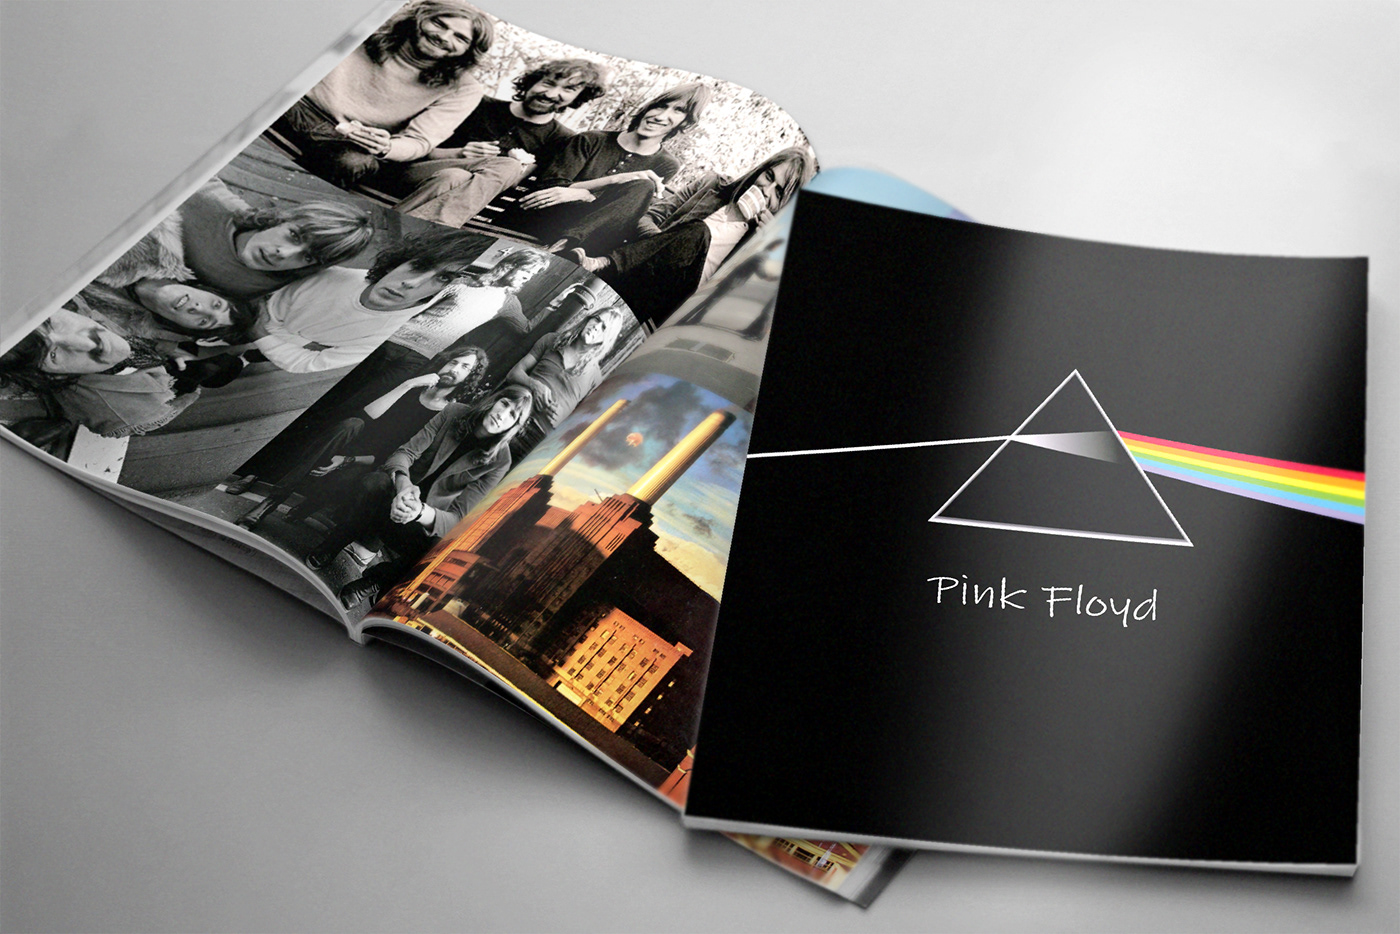 pink floyd magazine hystory   Members band music rock